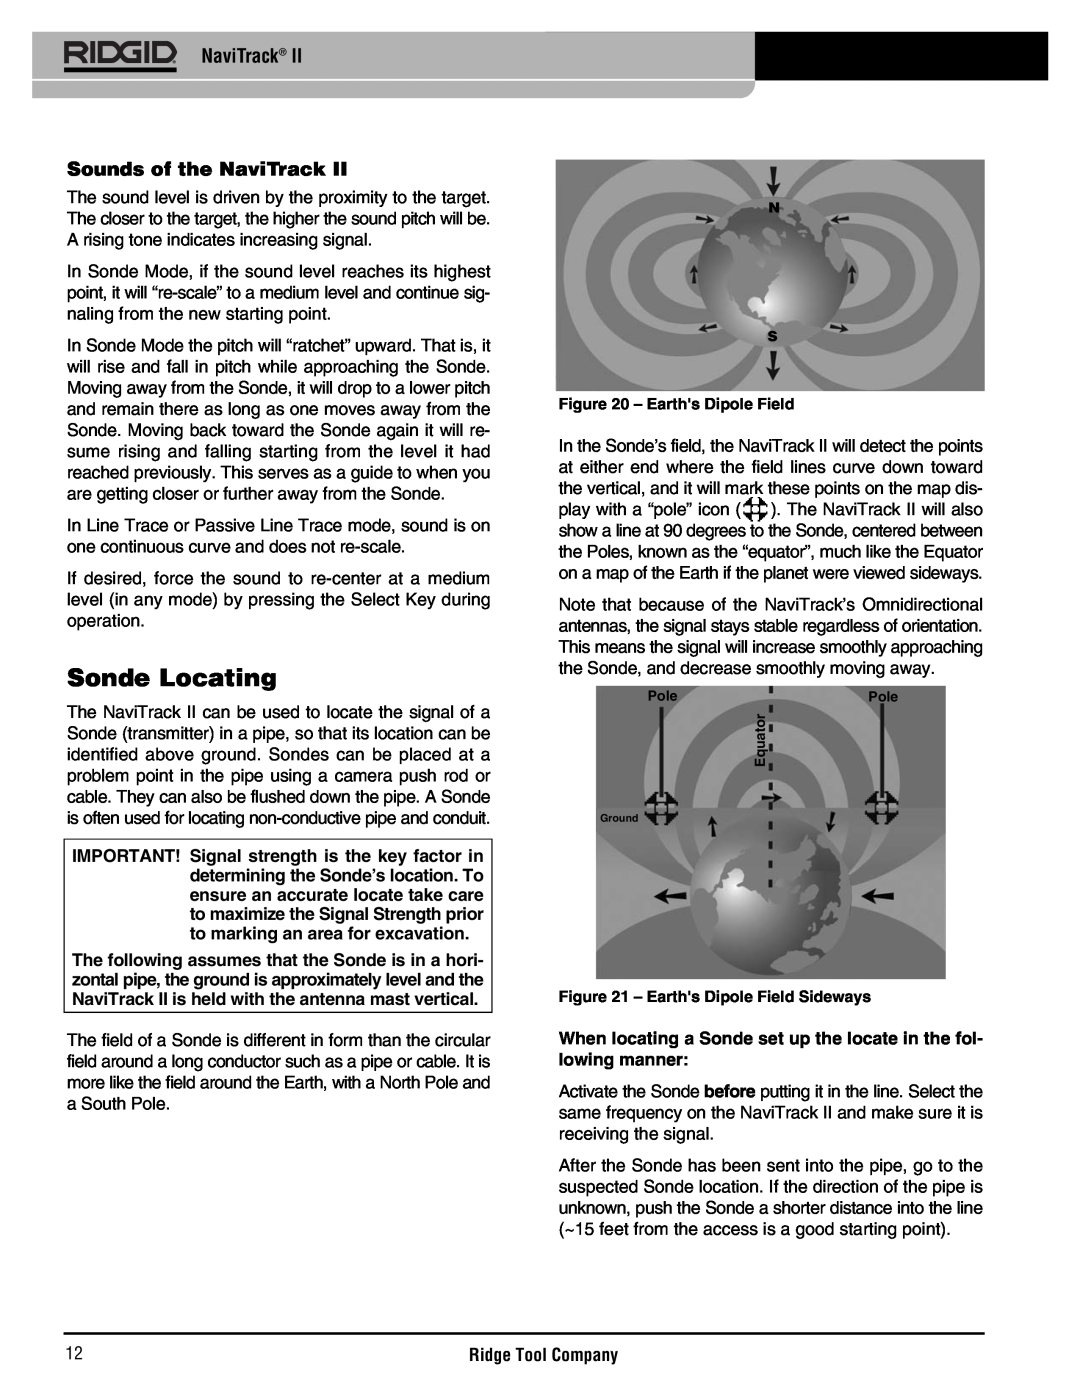 RIDGID Metal Detector manual Sonde Locating, Sounds of the NaviTrack 